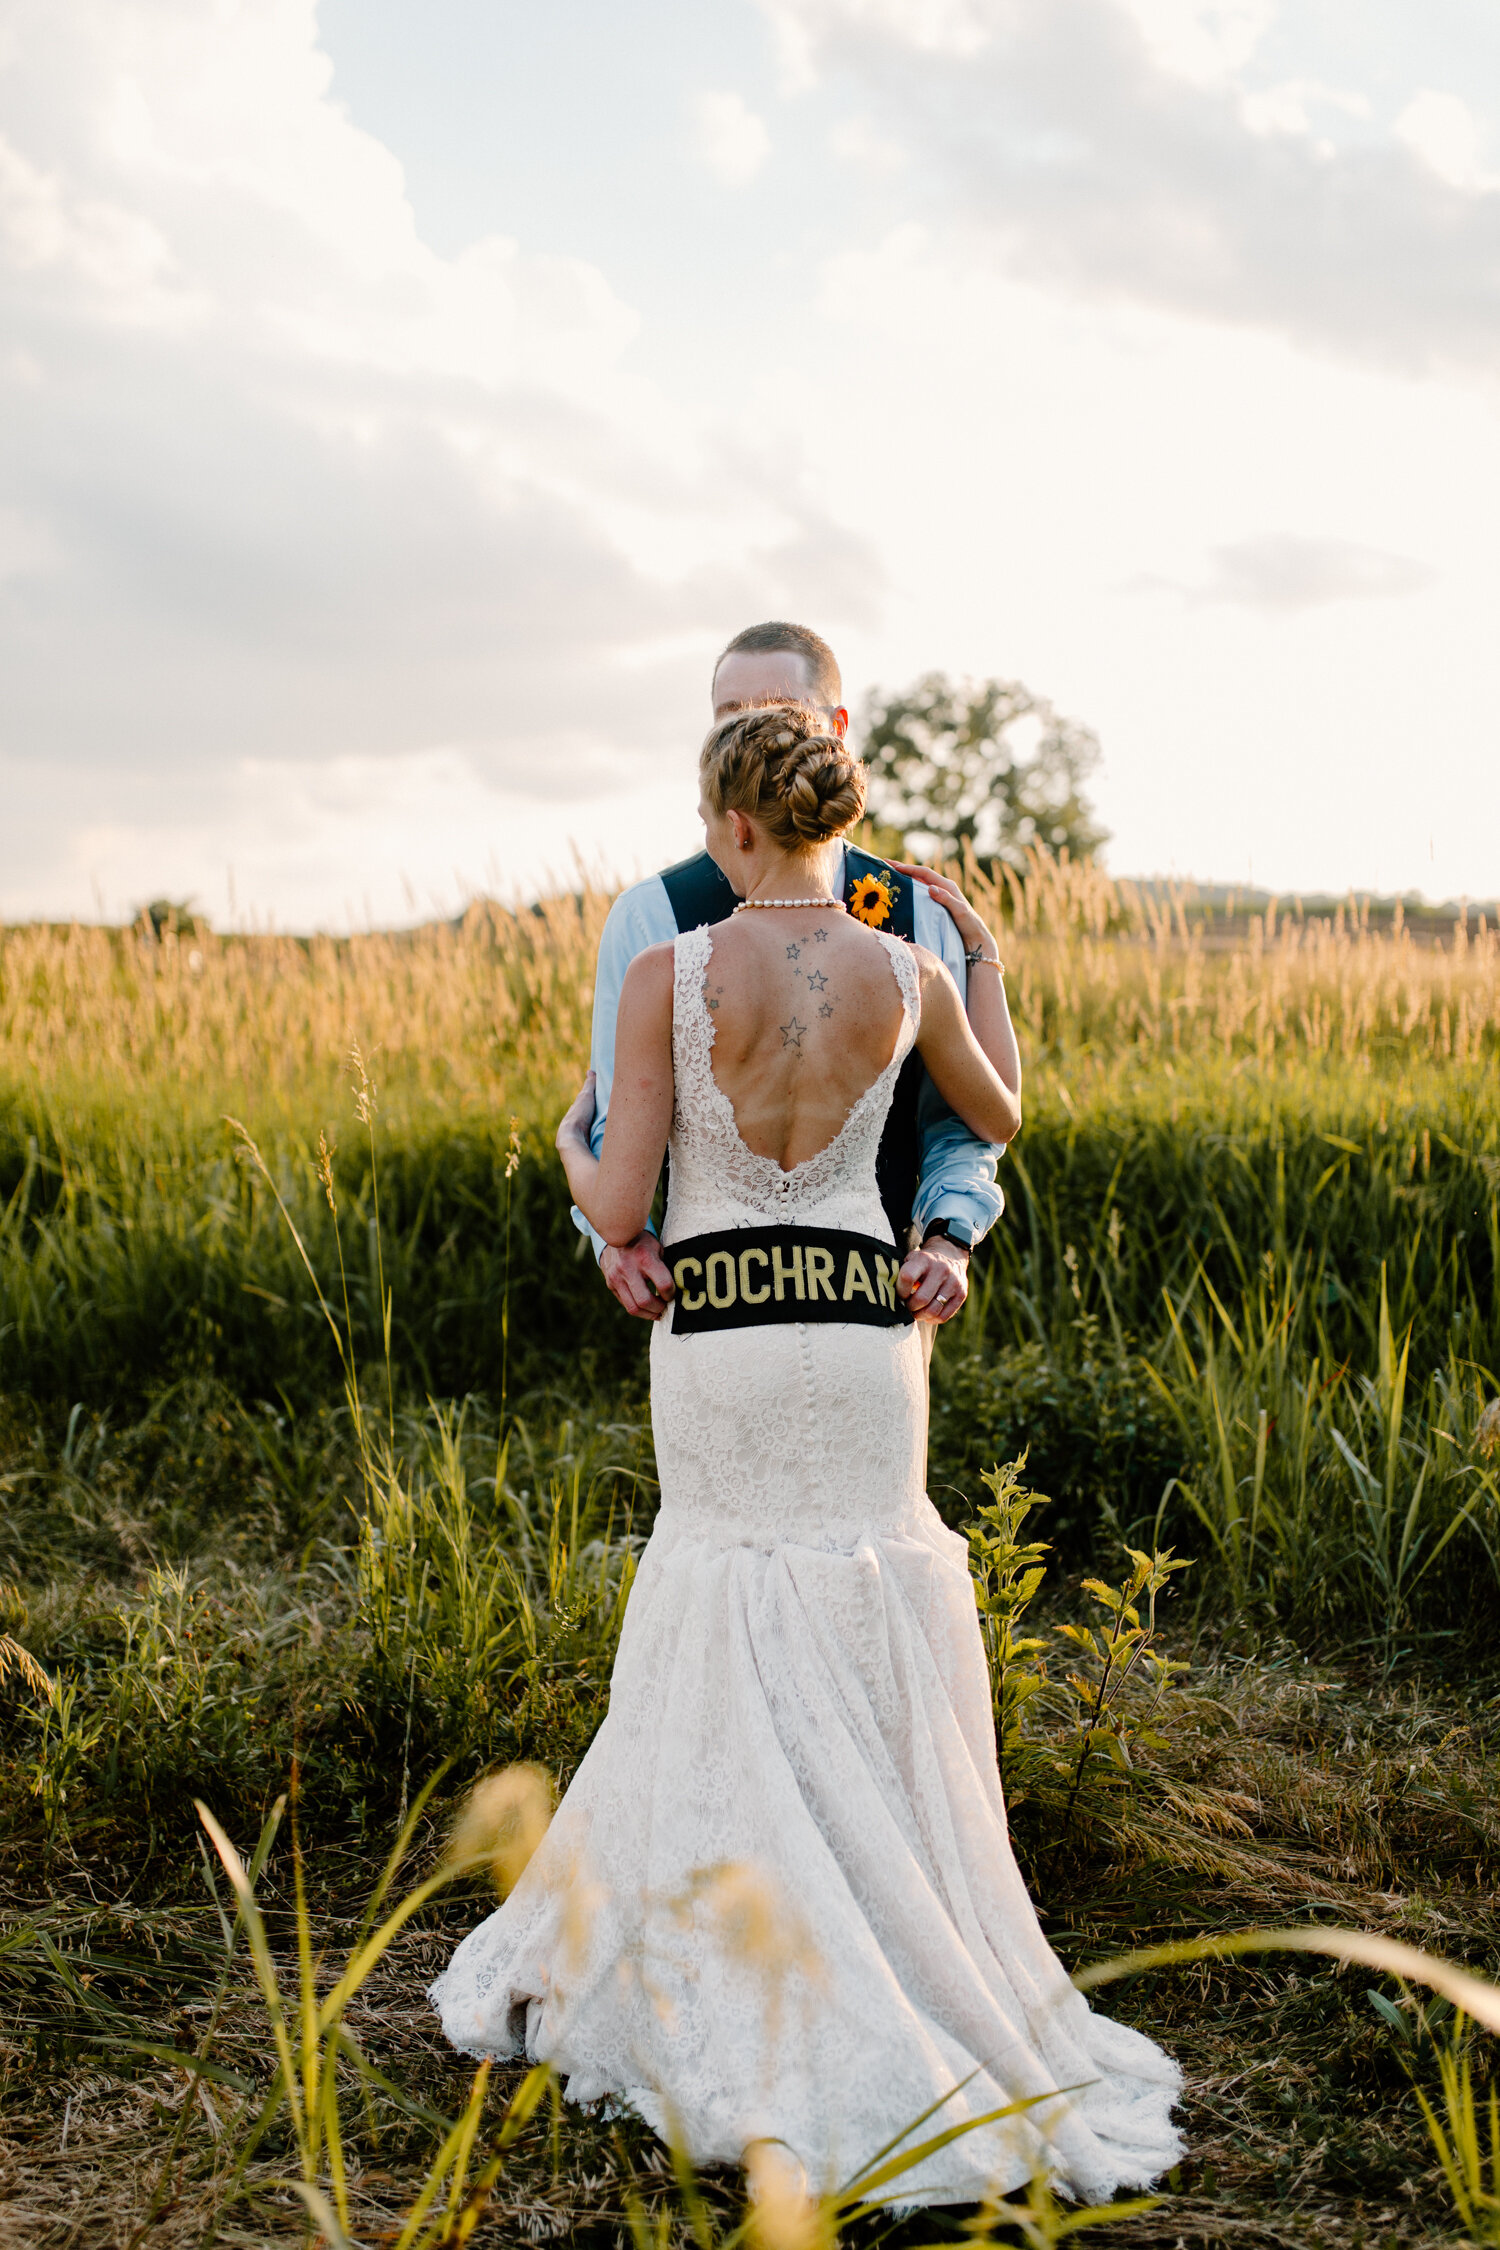 Leavenworth, Kansas Bride and Firefighter Groom Newlywed Portraits by Kayli LaFon Photography | Intimate Travel Wedding & Elopement Photographer